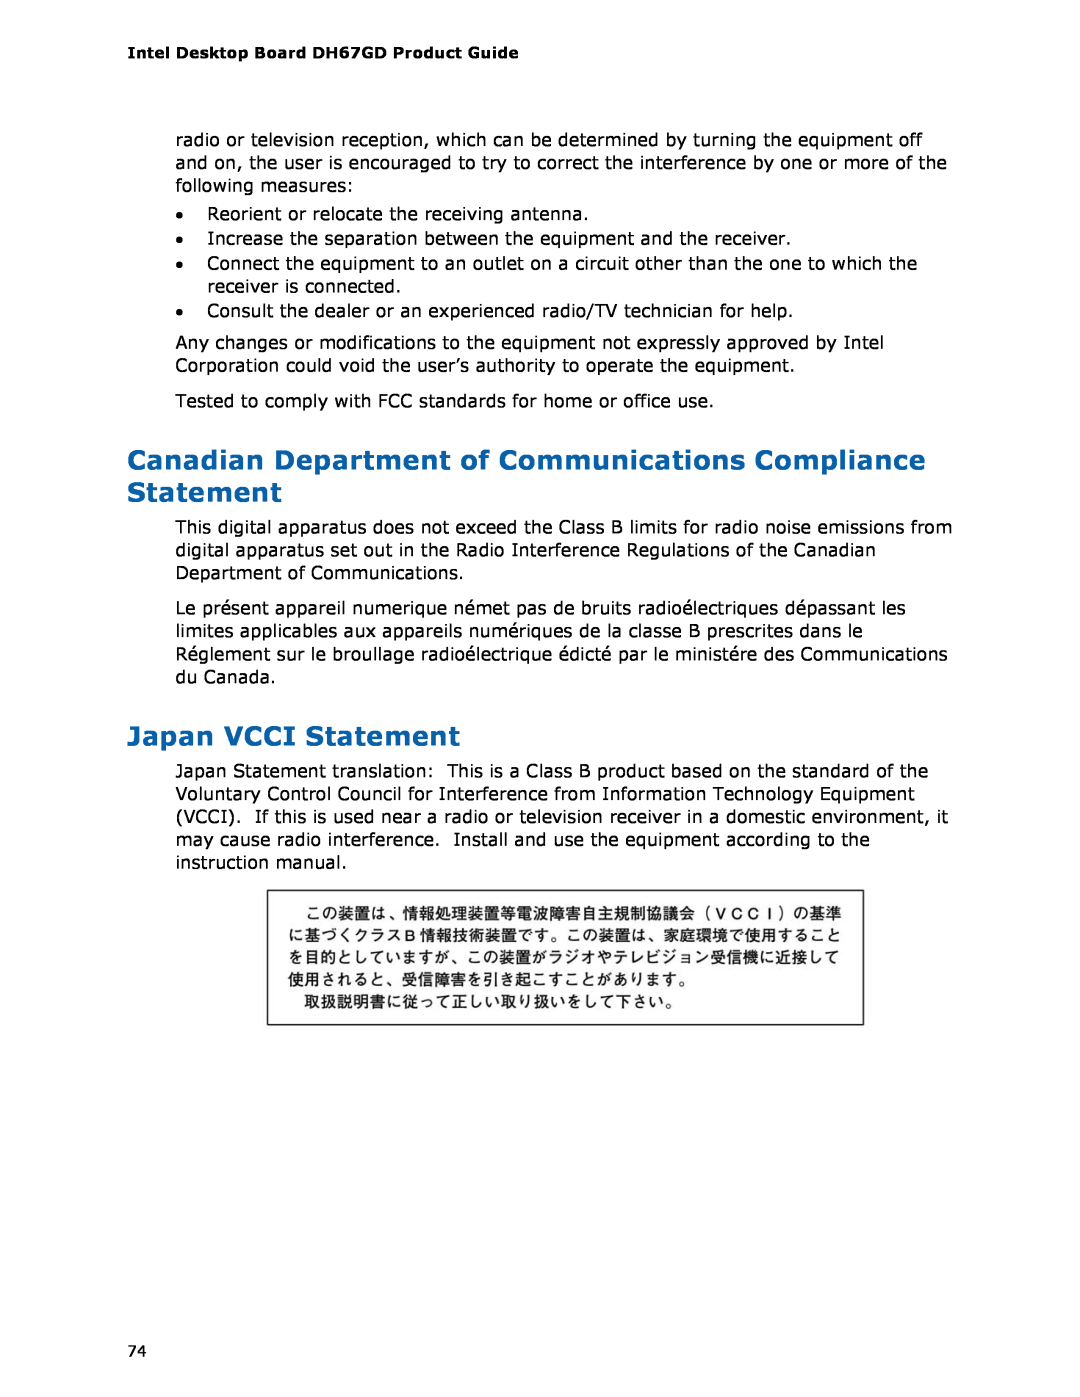 Intel G13841-001, BLKDH67GDB3 manual Canadian Department of Communications Compliance Statement, Japan VCCI Statement 